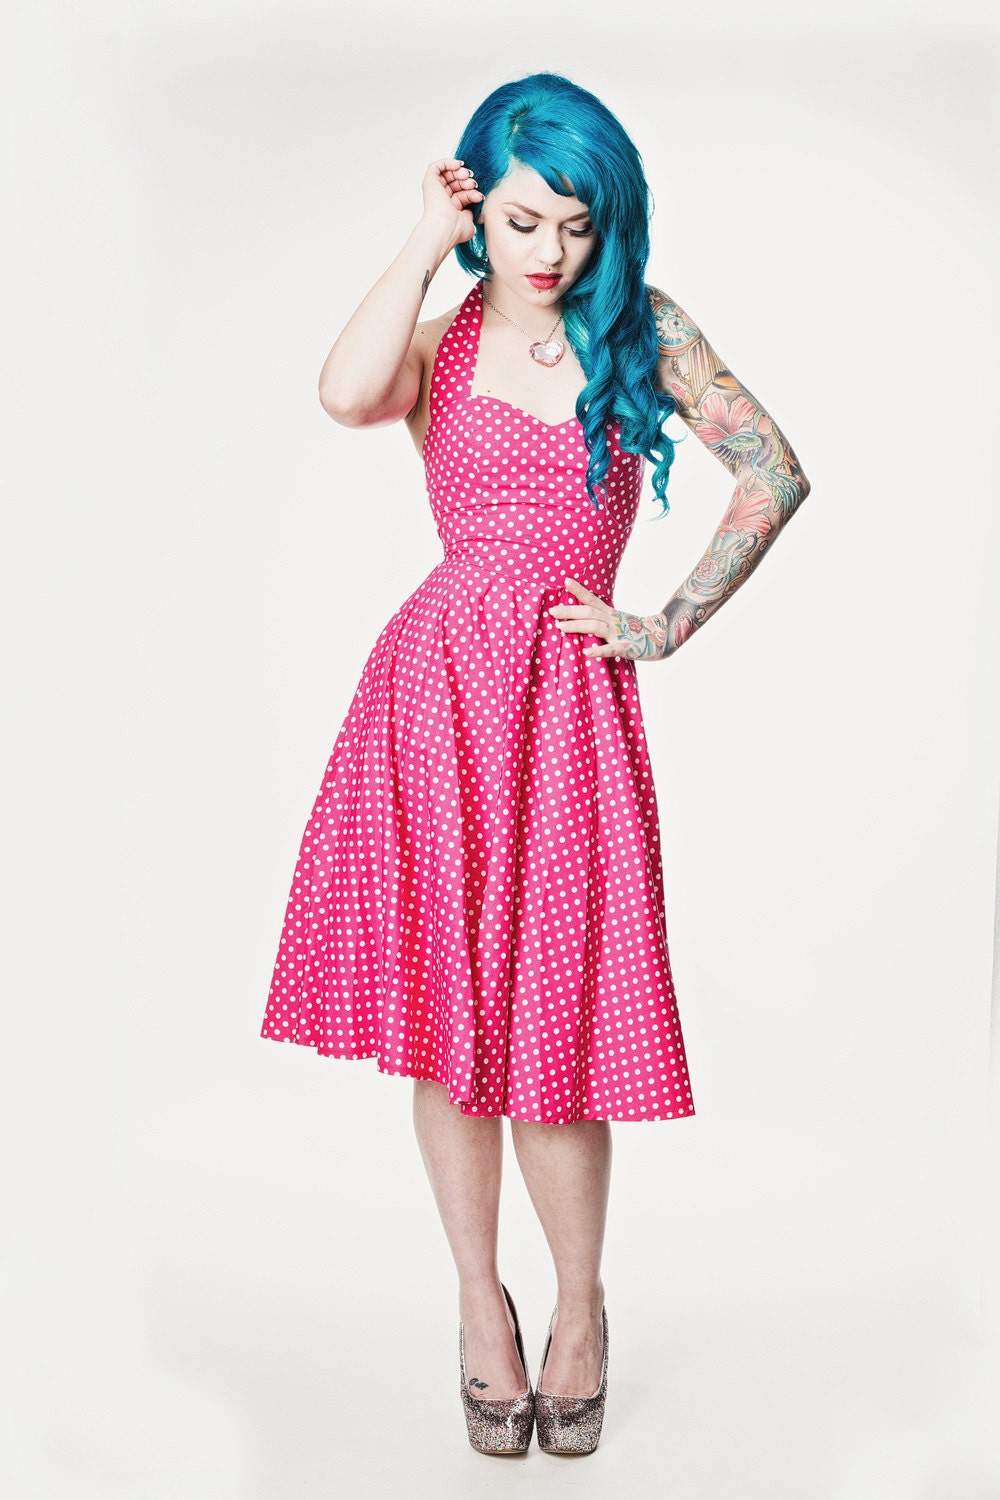 Pink polka dot Rockabilly dress- Pin up, 50's style